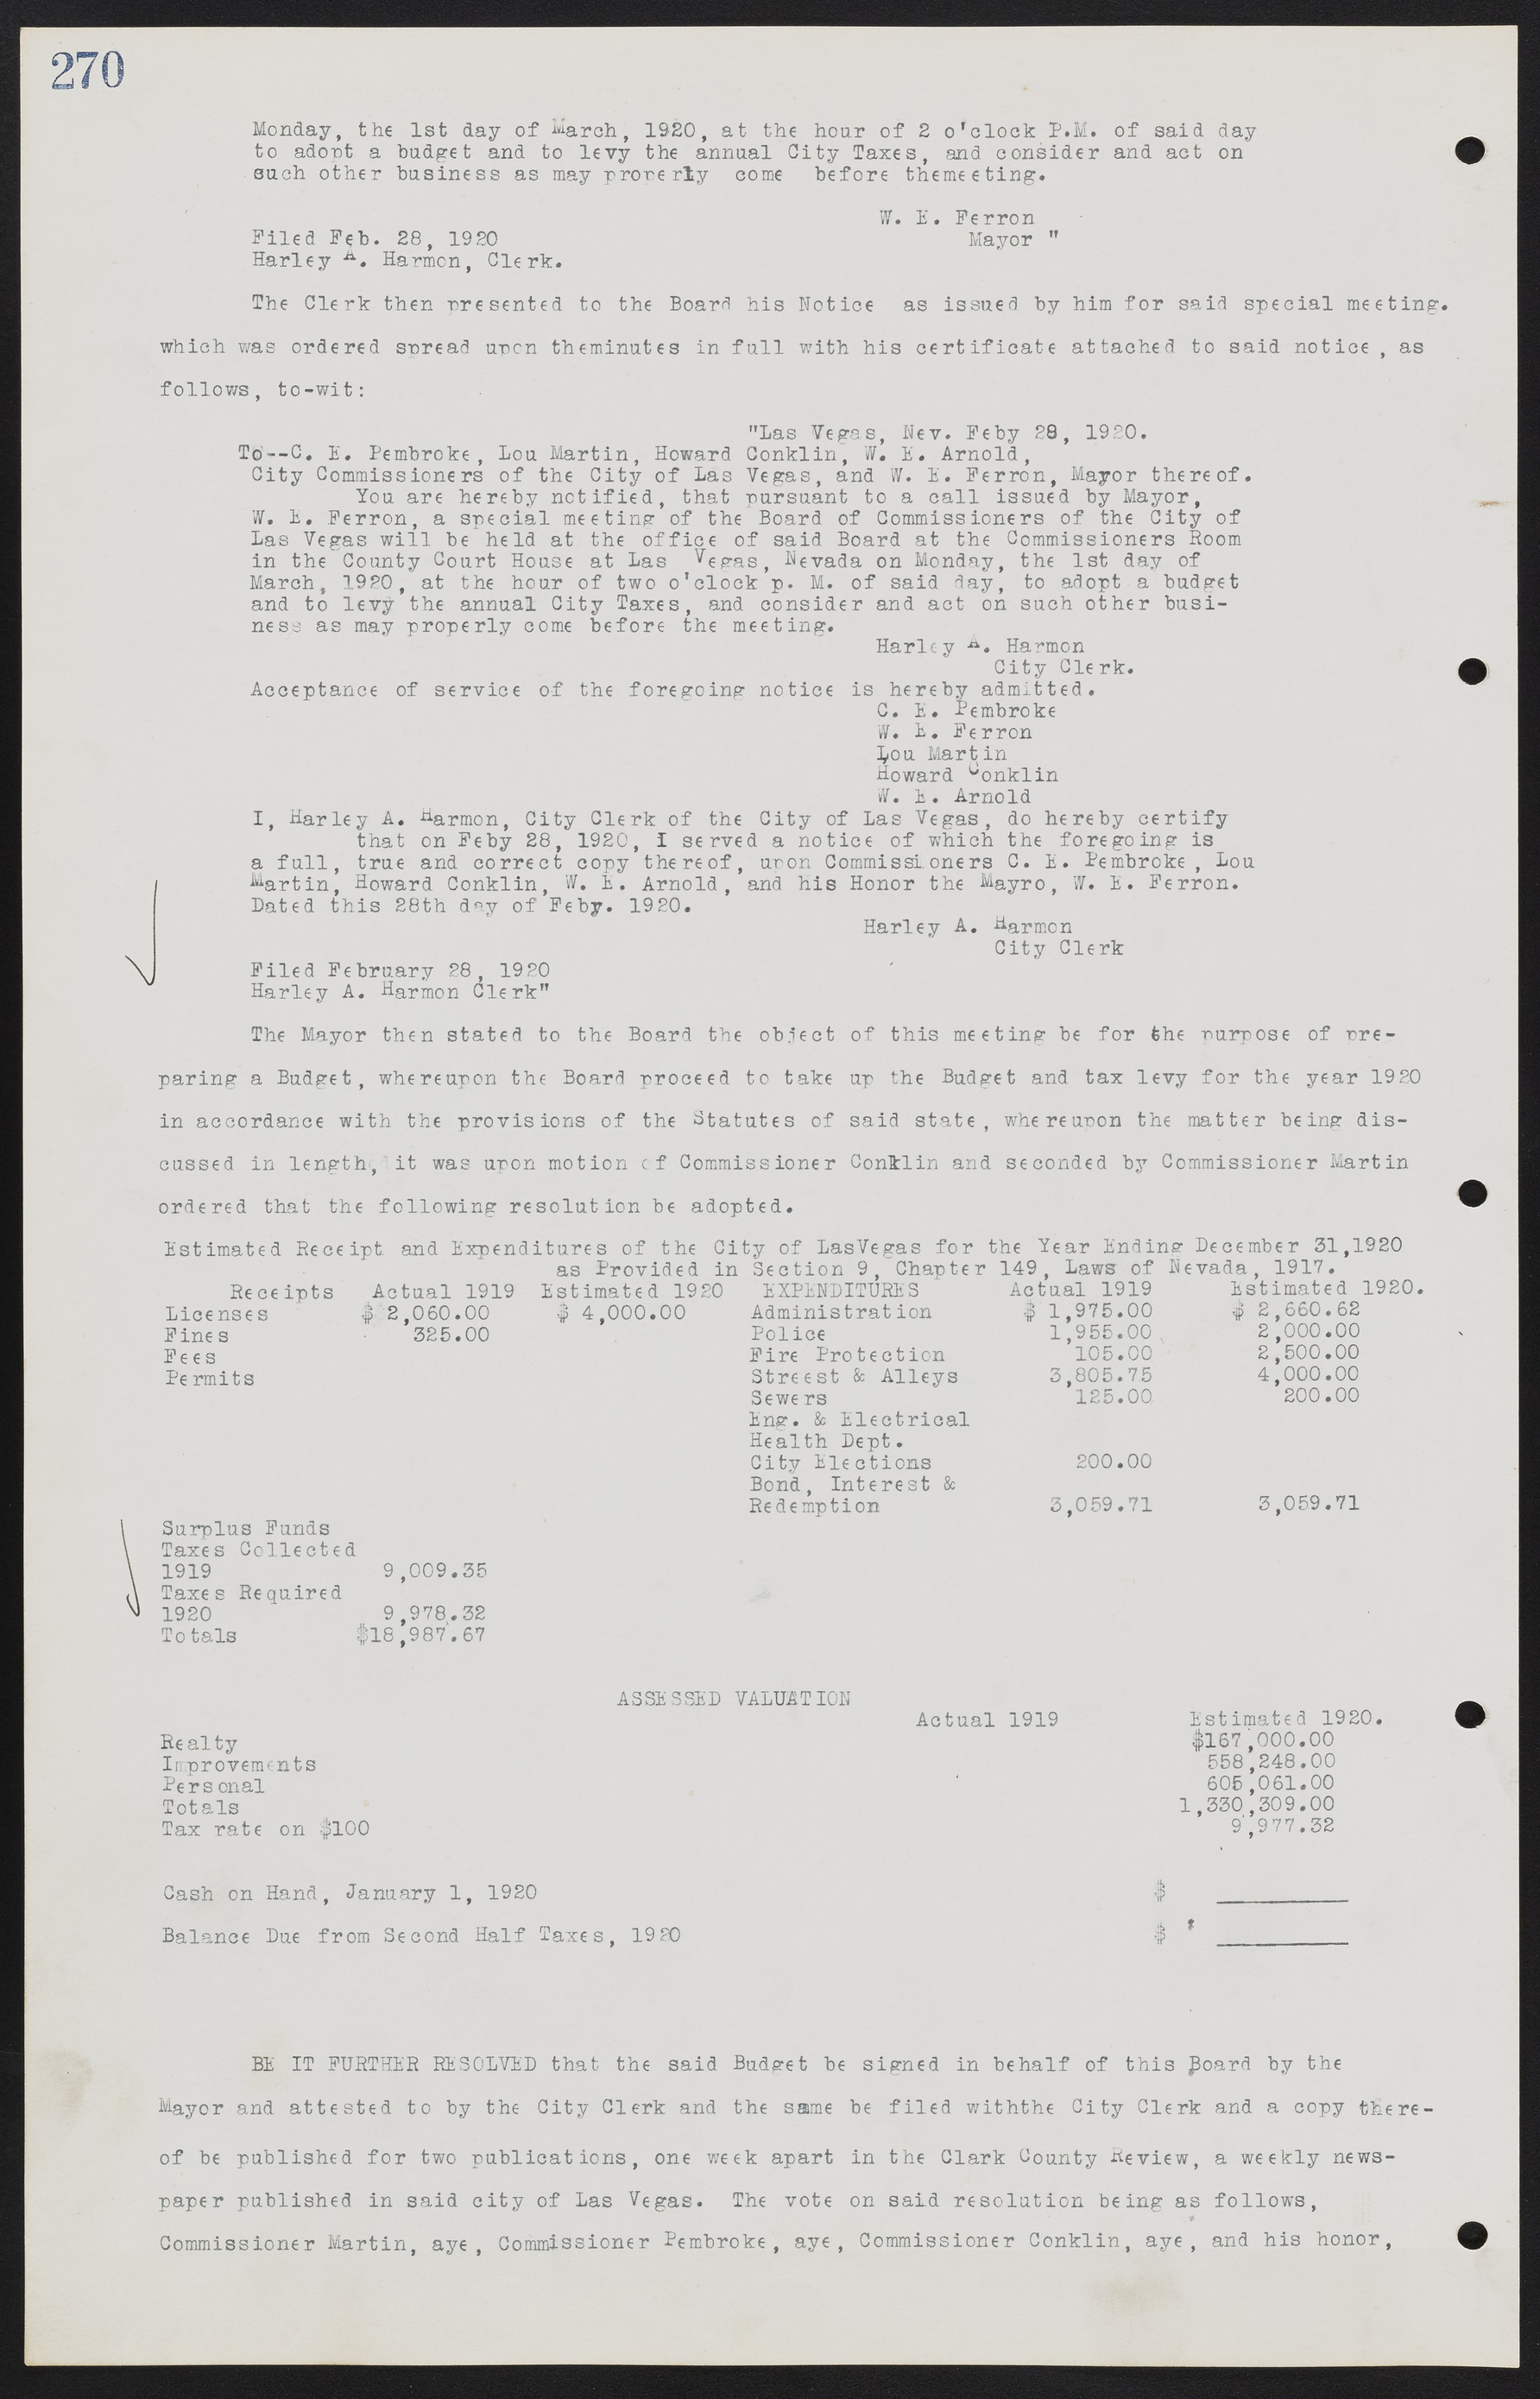 Las Vegas City Commission Minutes, June 22, 1911 to February 7, 1922, lvc000001-286